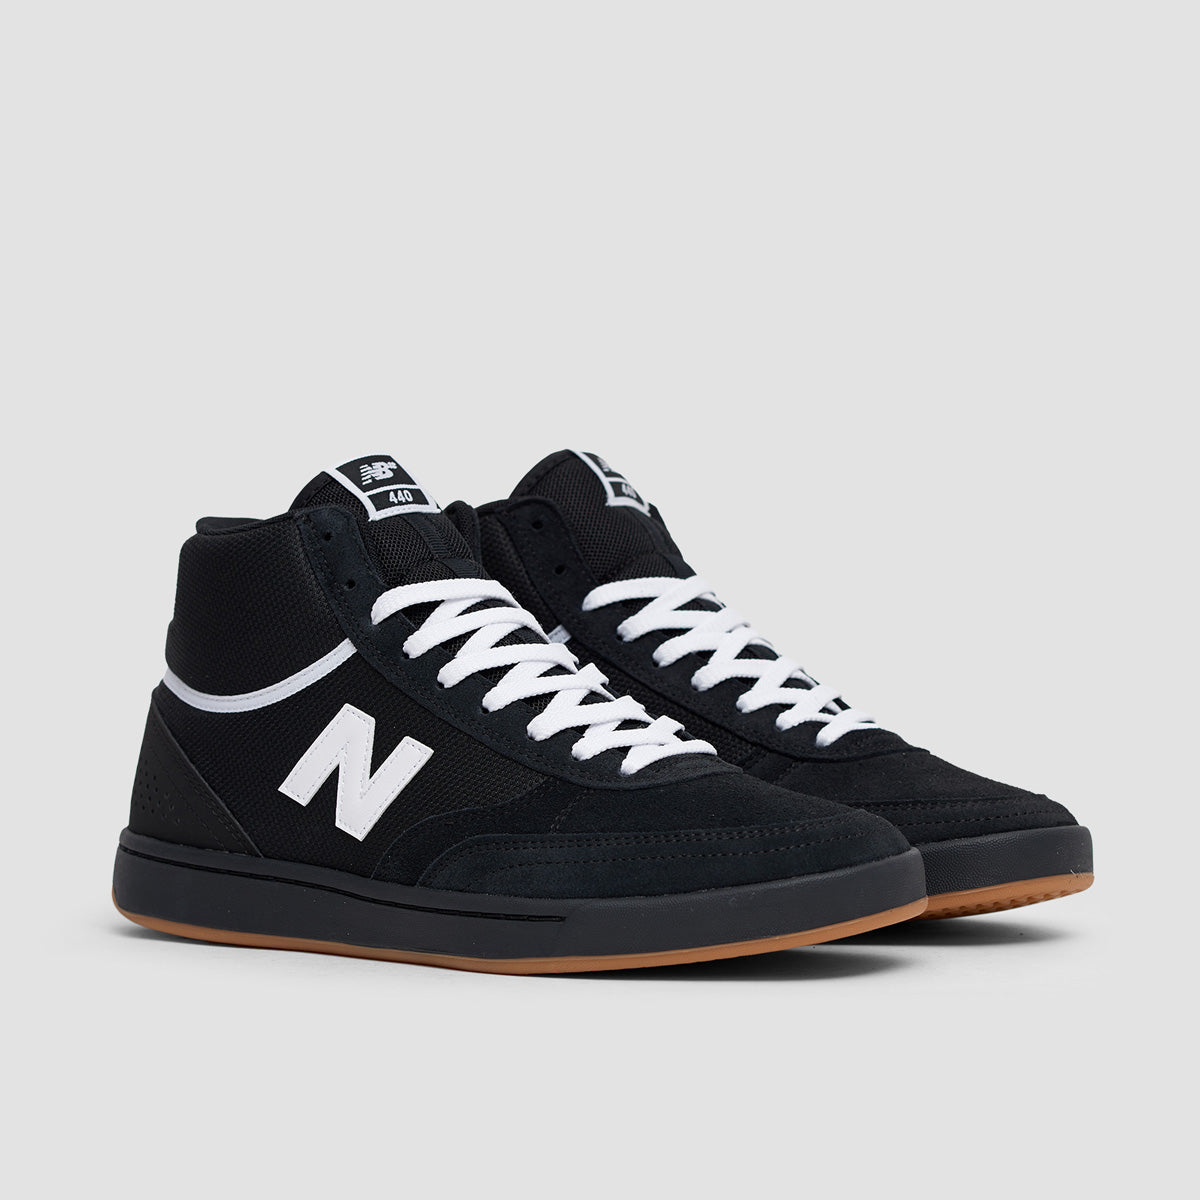 New Balance Numeric 440 High Shoes - Black/White